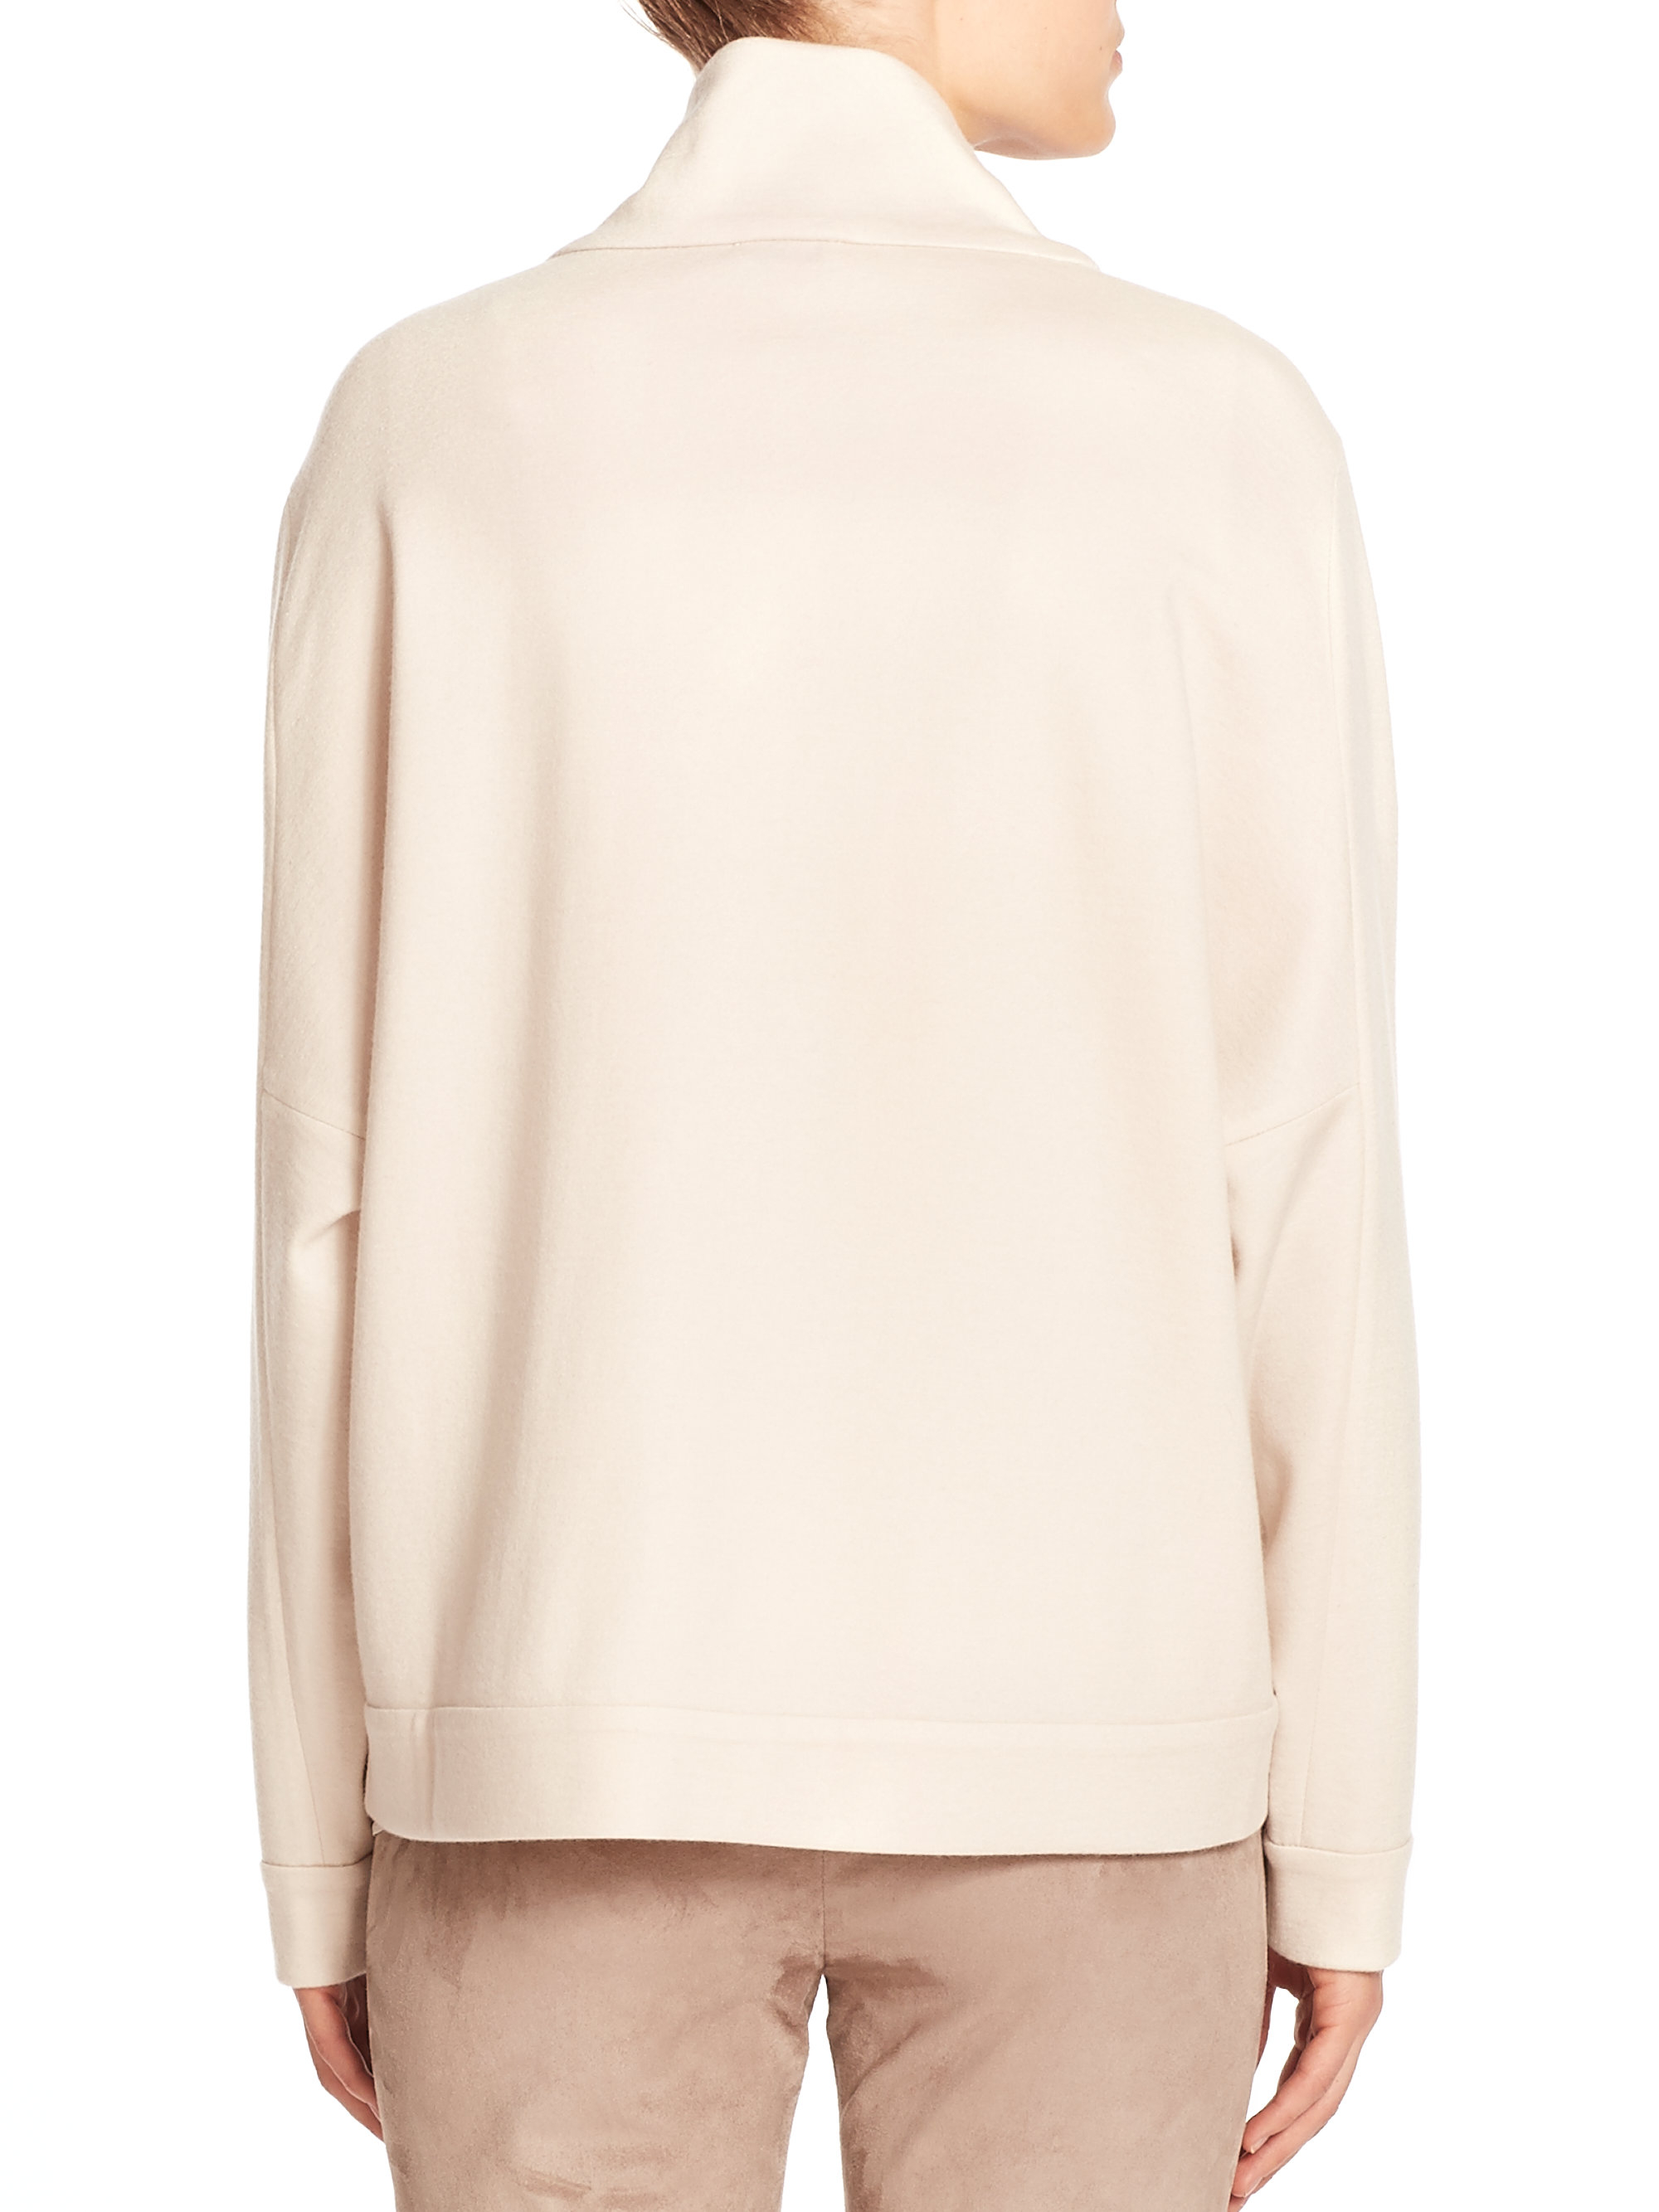 Lyst - Brunello Cucinelli Zip-neck Cashmere Sweater in White